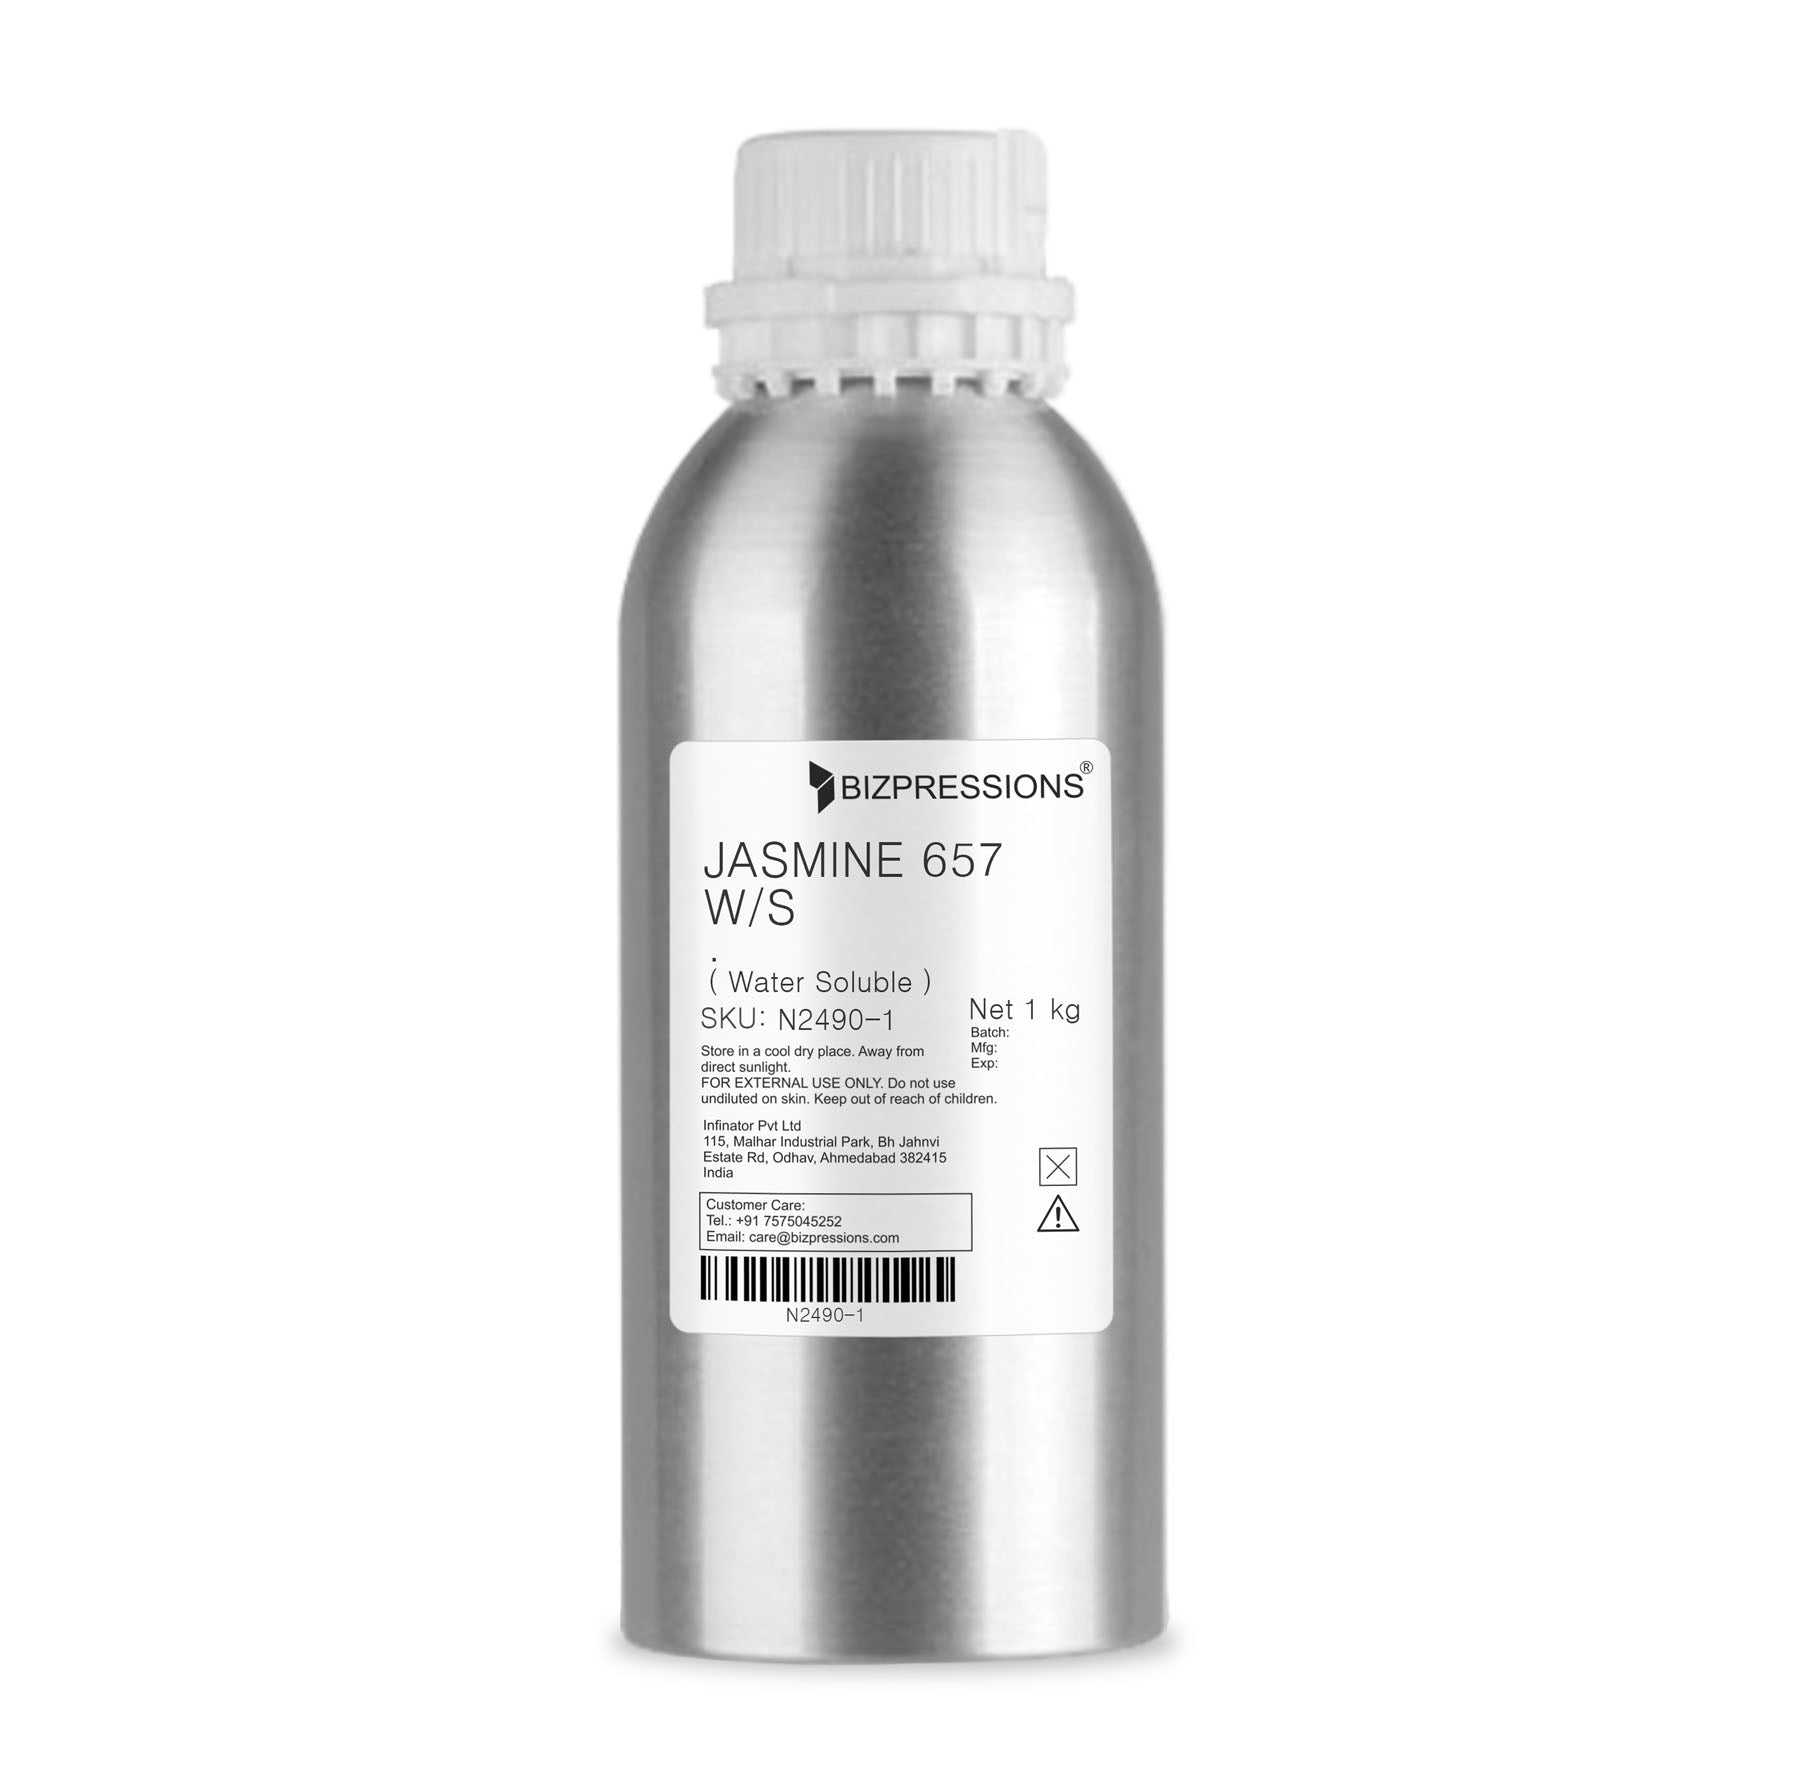 JASMINE 657 W/S - Fragrance ( Water Soluble ) - 1 kg